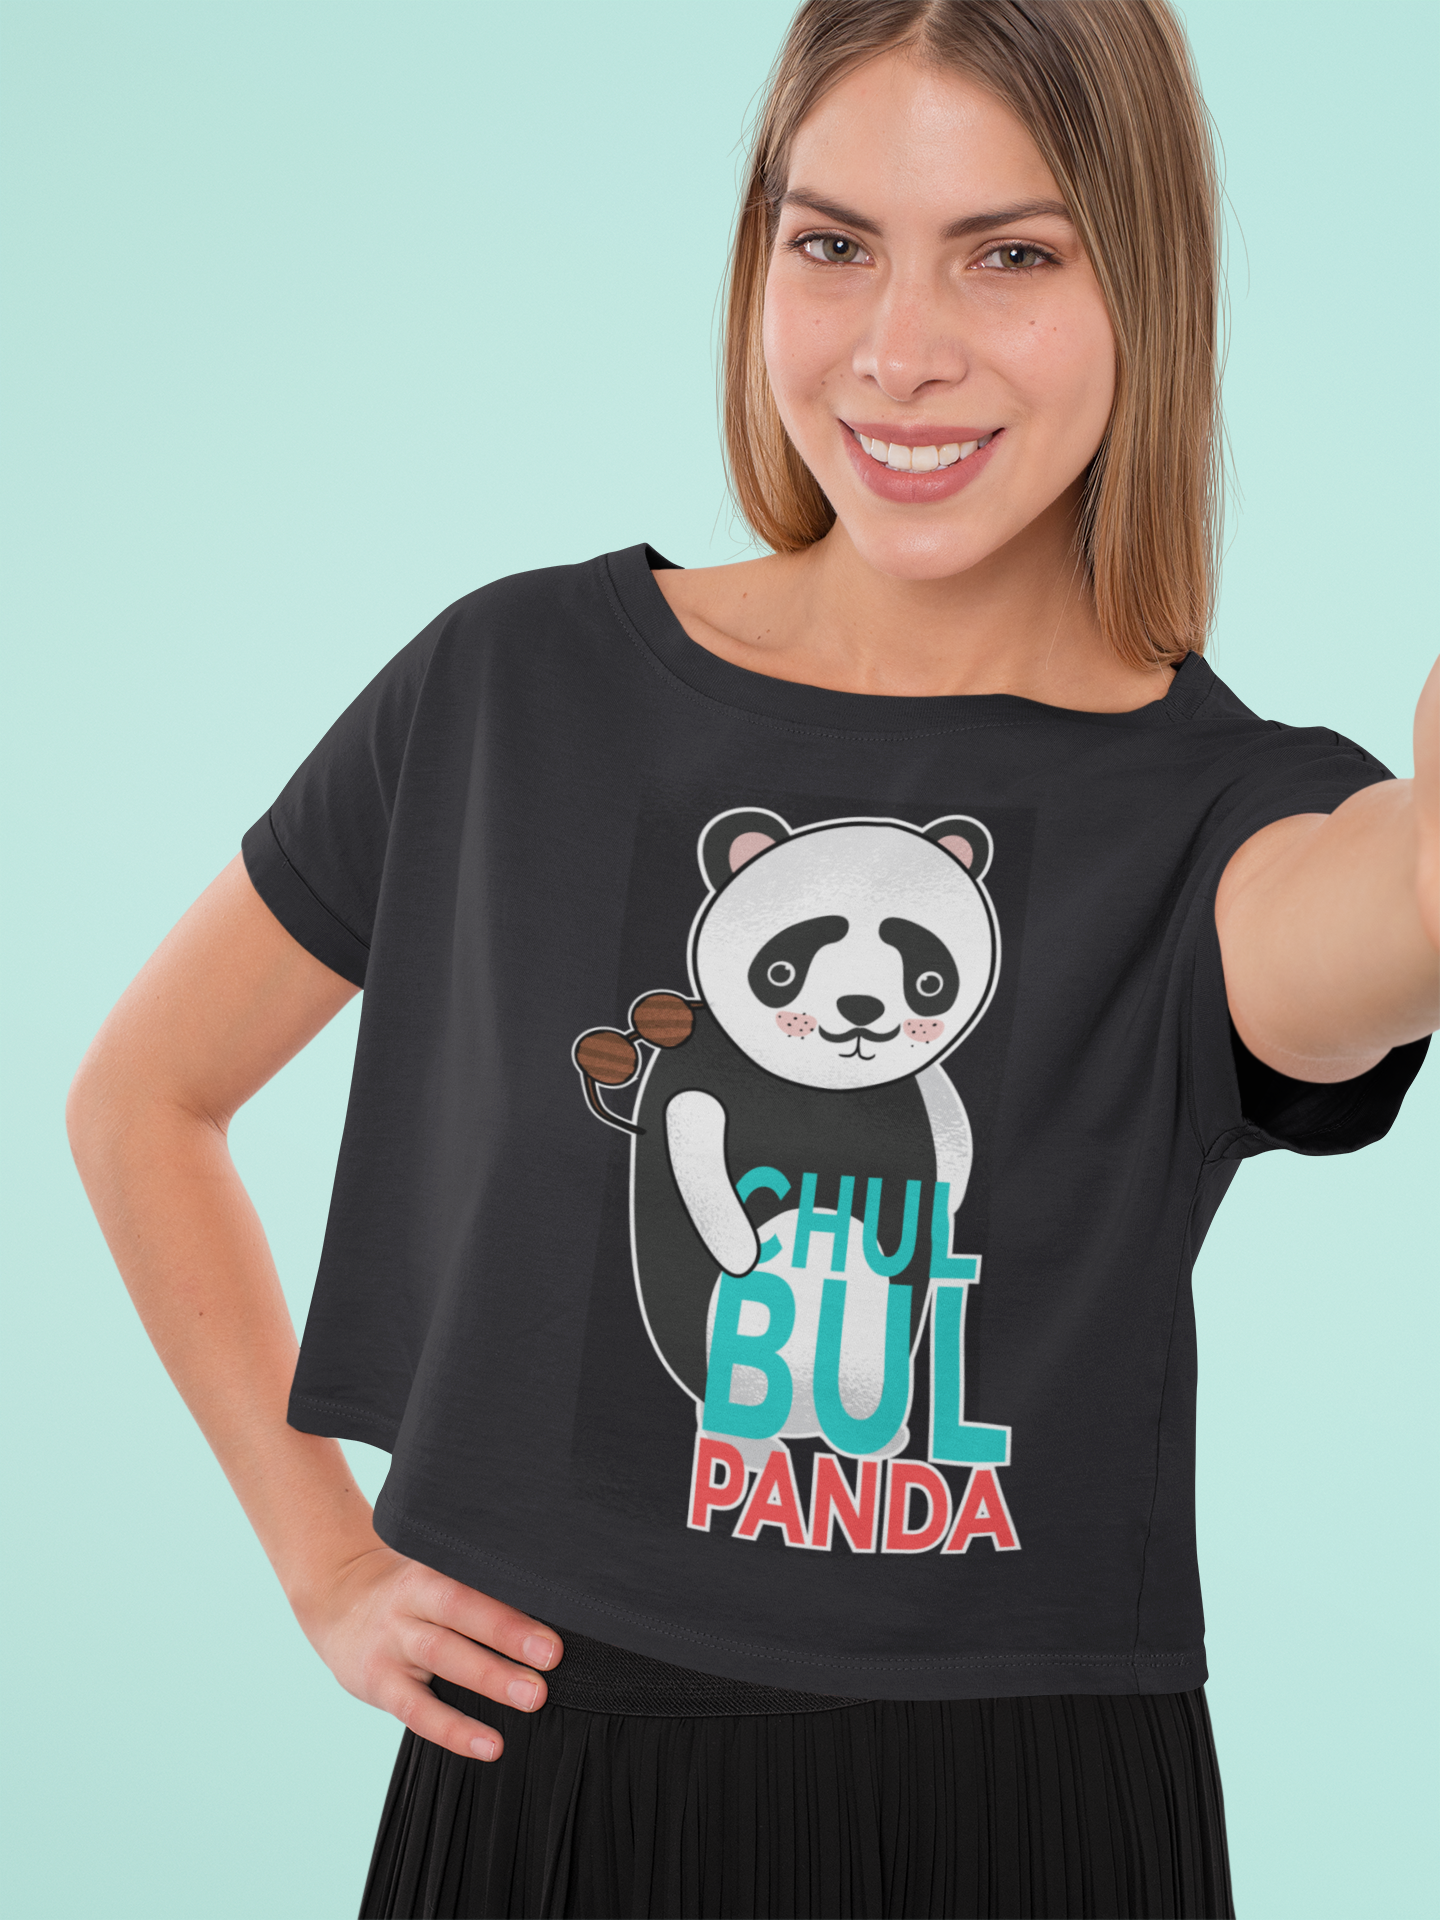 Chul bul panda Women Crop Top- FunkyTeesClub